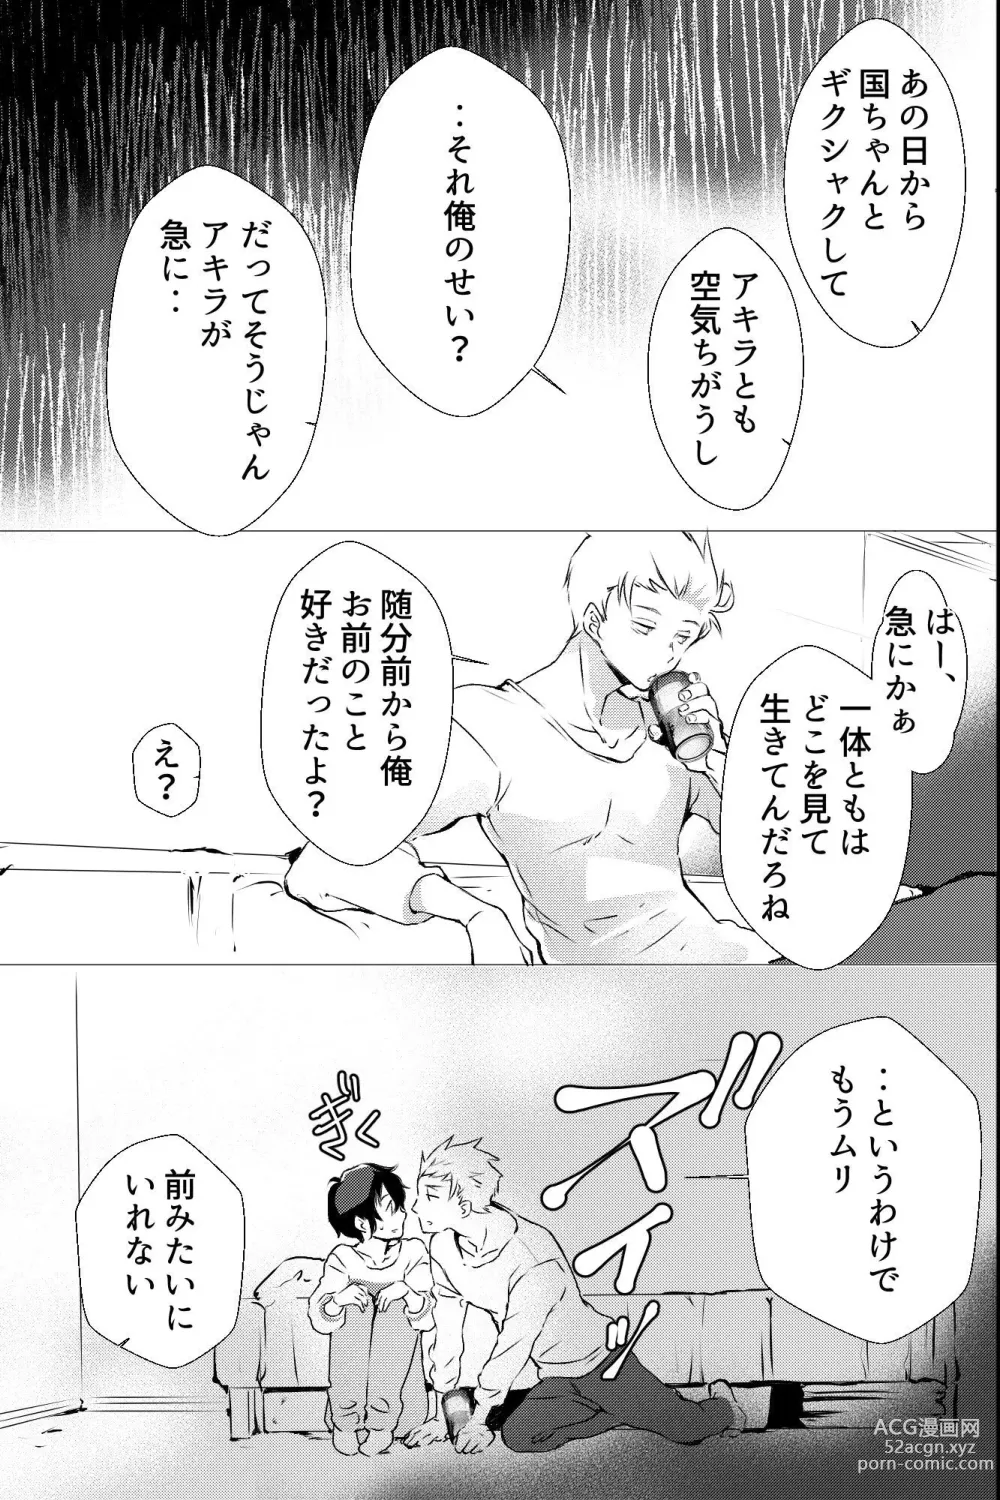 Page 12 of doujinshi 俺しか知らない親友のカオ。媚薬を親友に盛られたら